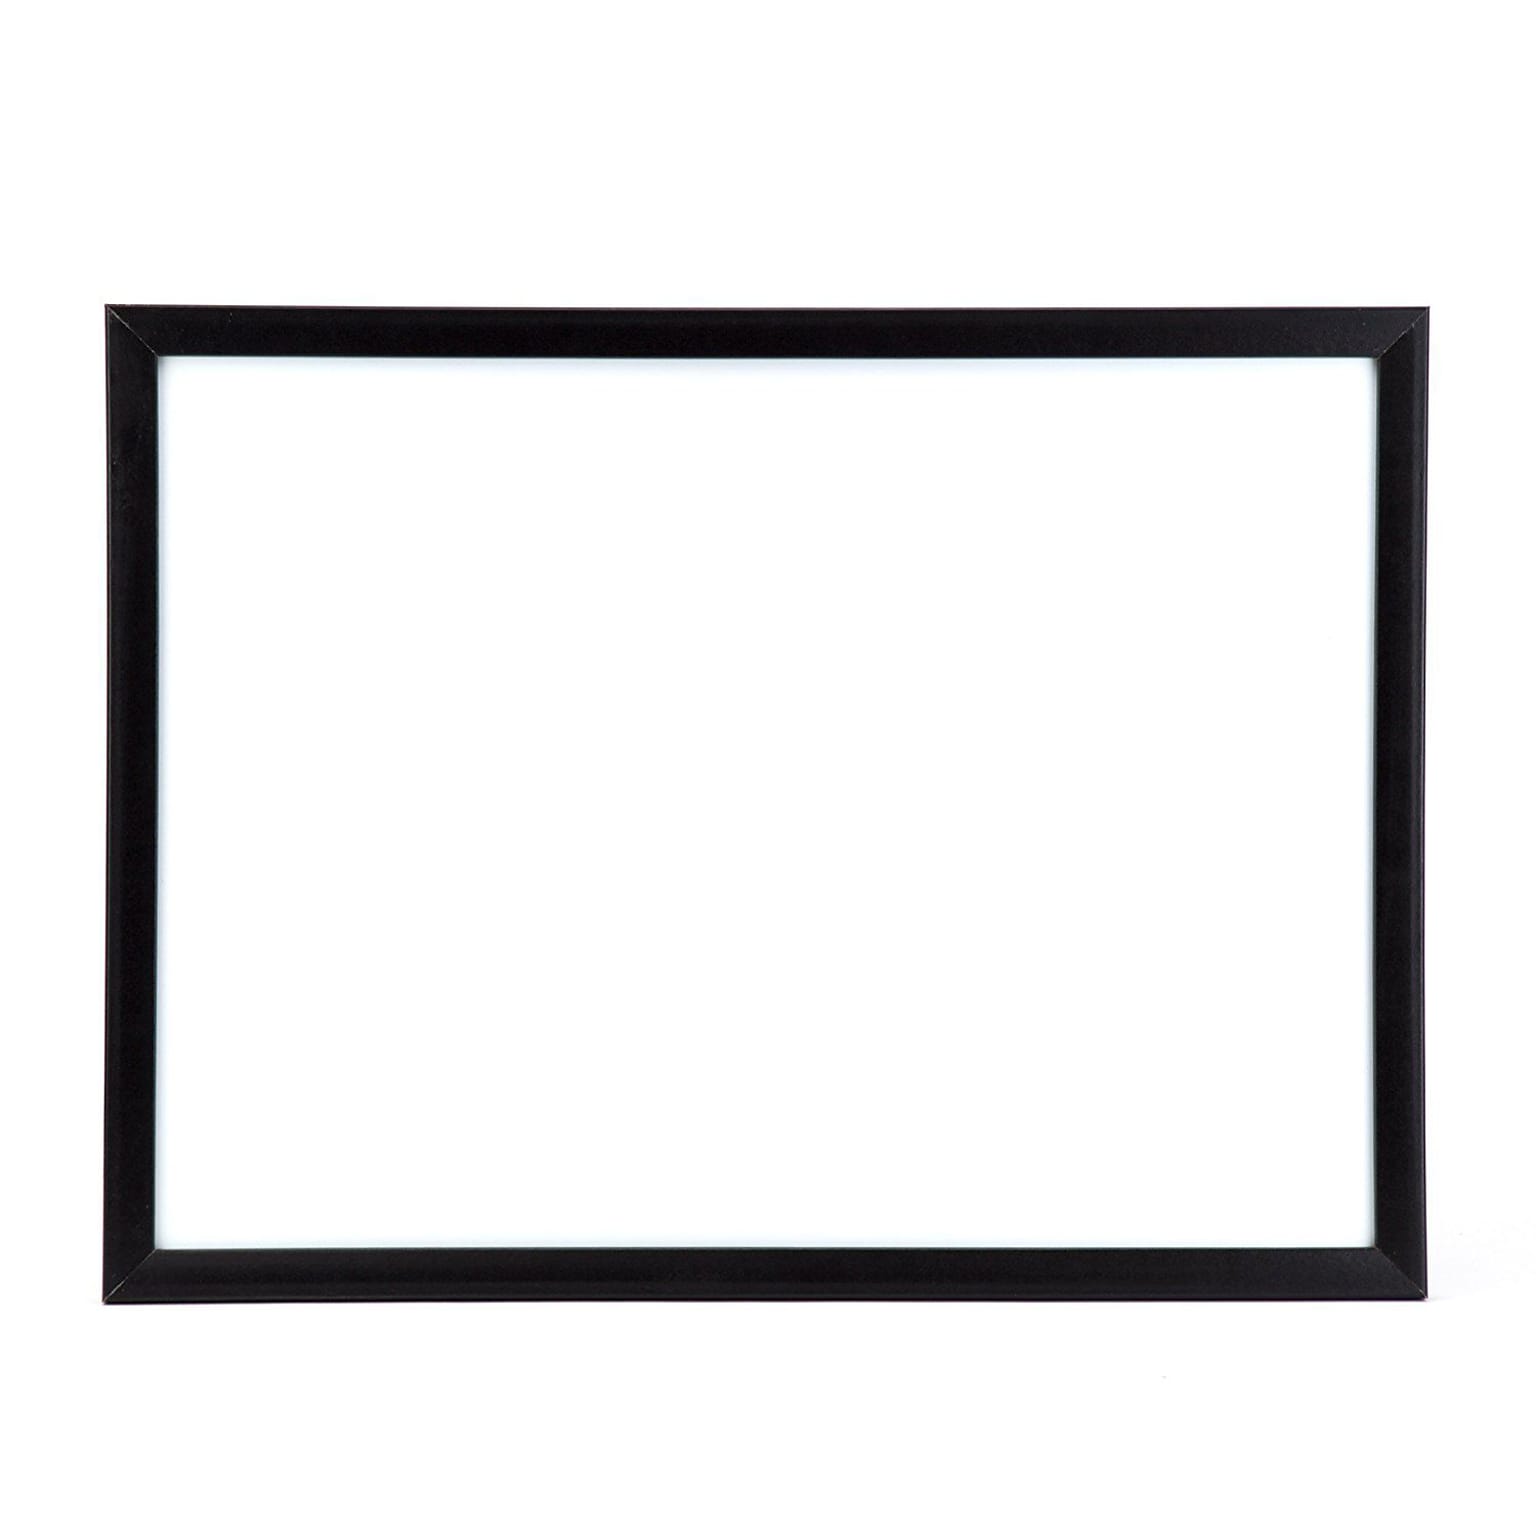 U Brands Magnetic Dry Erase Whiteboard, Black MDF Frame, 23 x 17 (307U00-01)